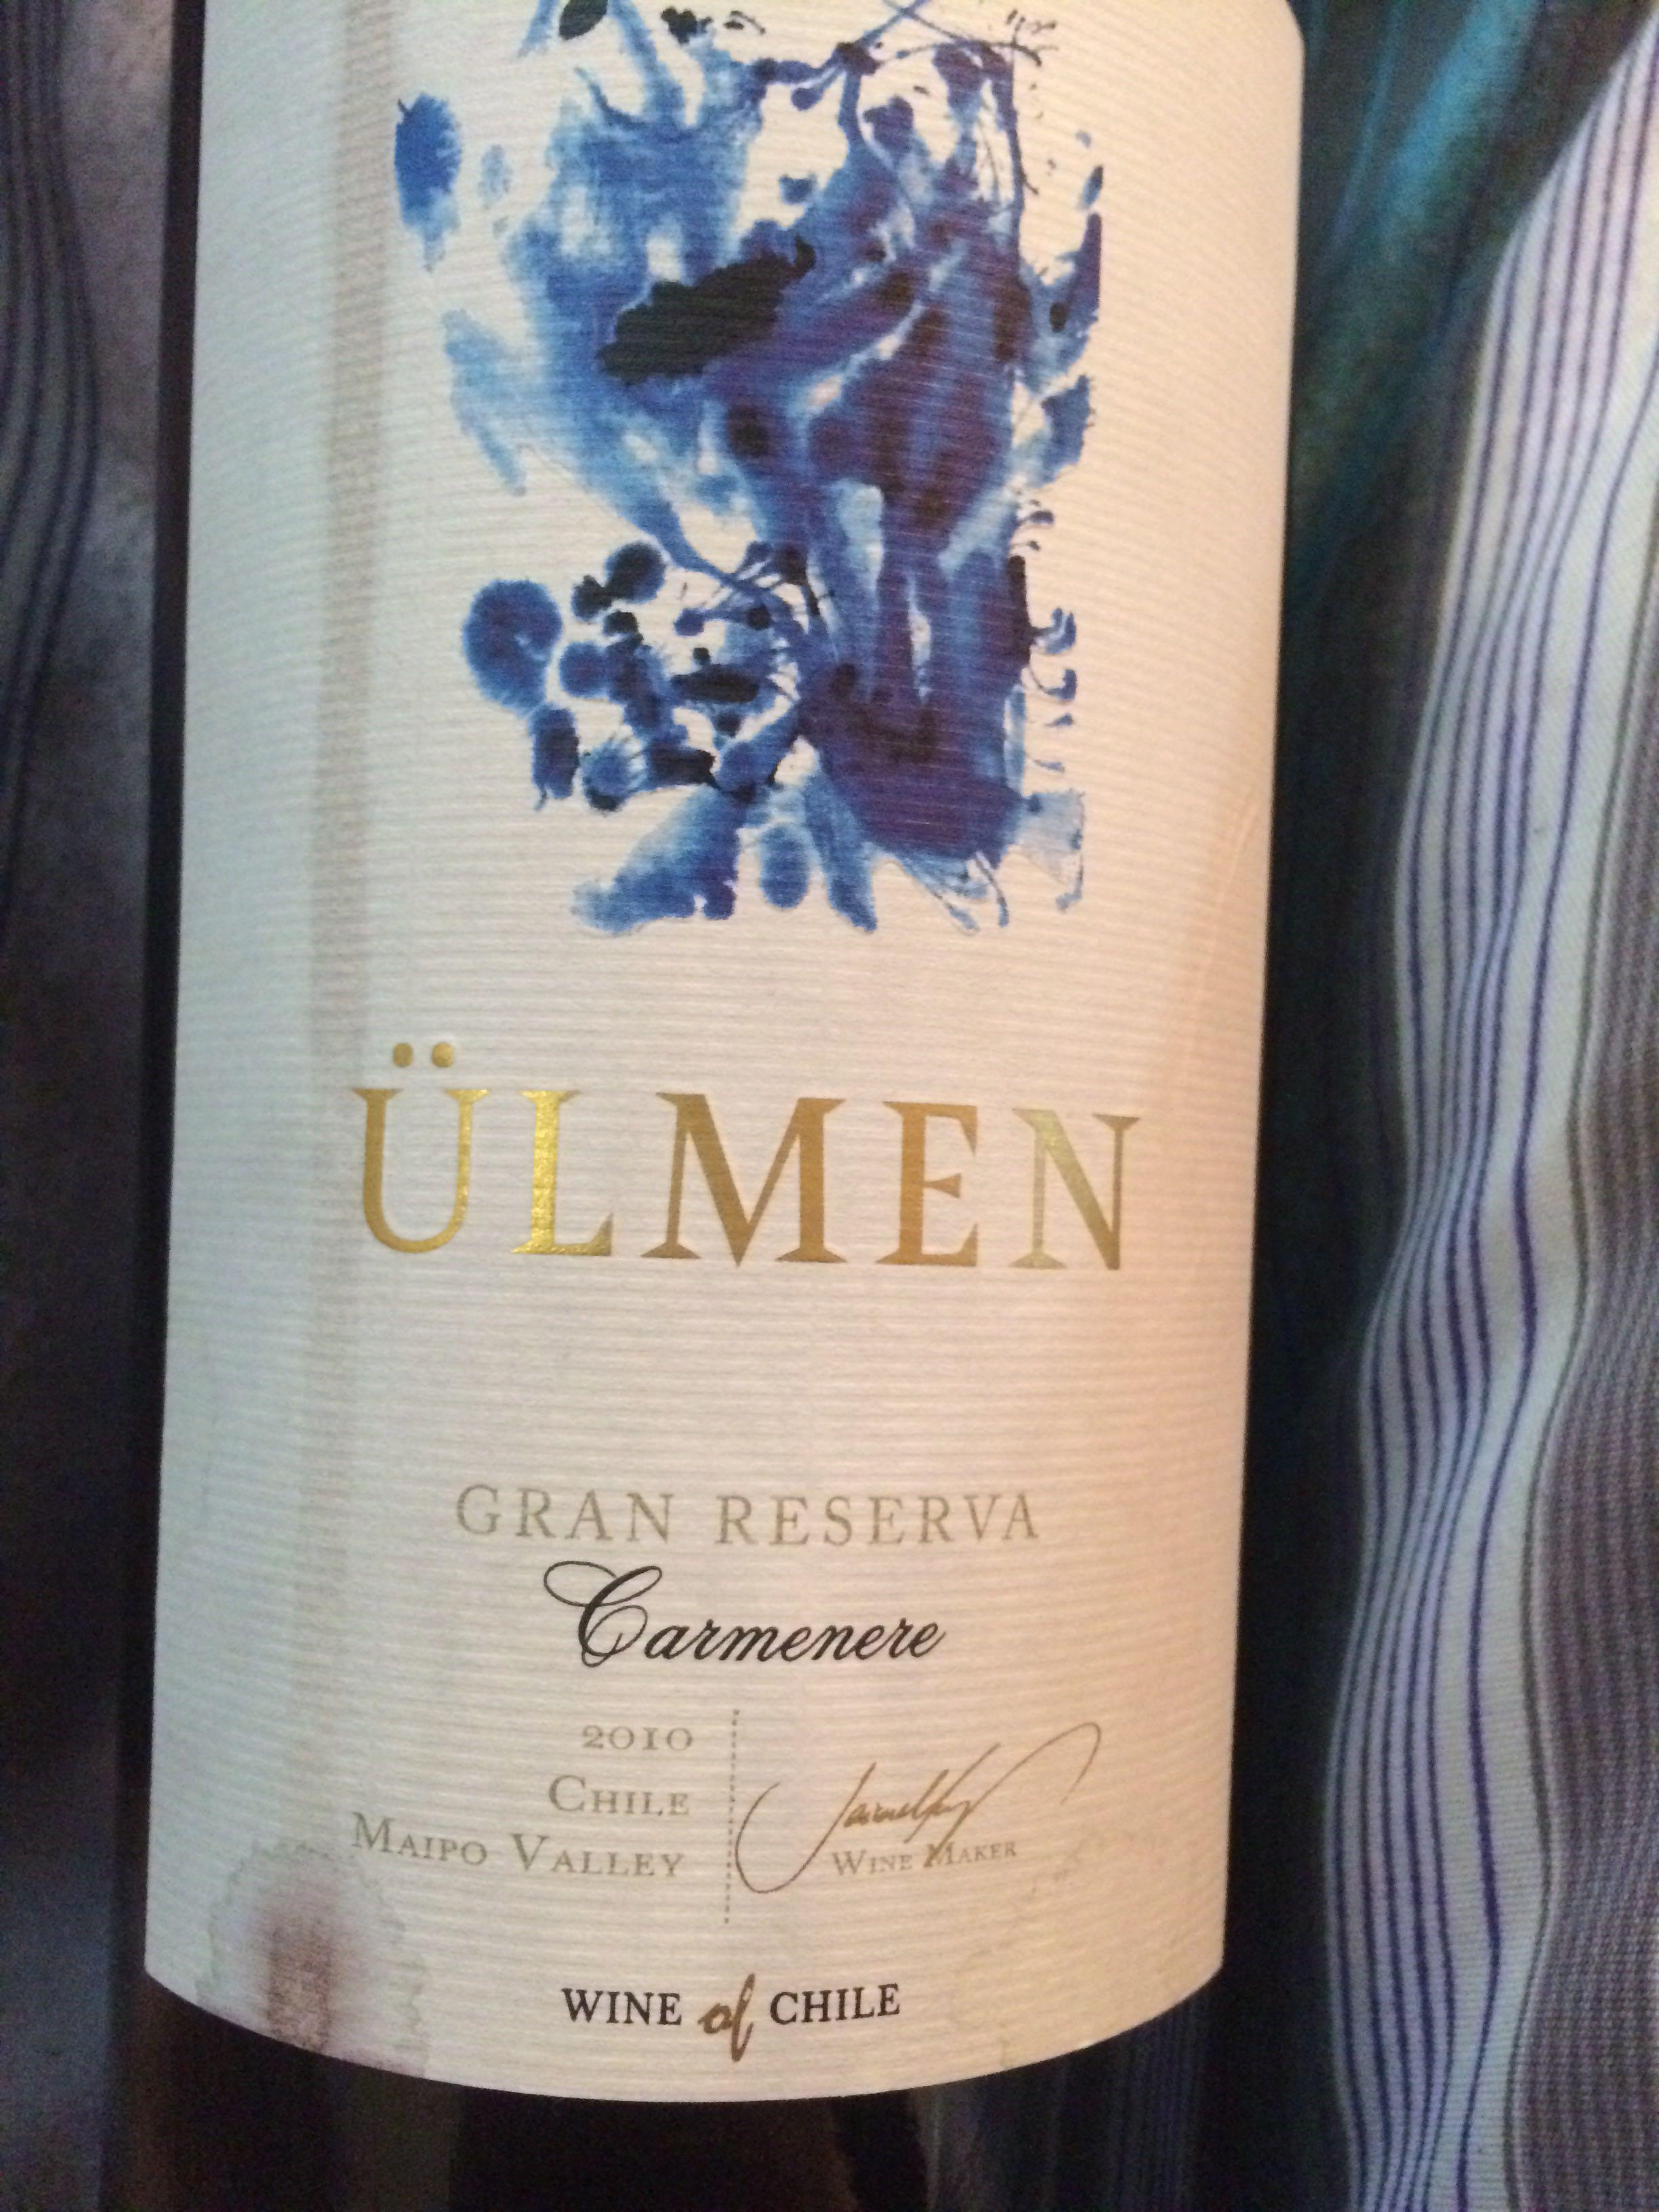 UlMEN Gran reserva 2010 红酒多少钱? - 酒 - 知